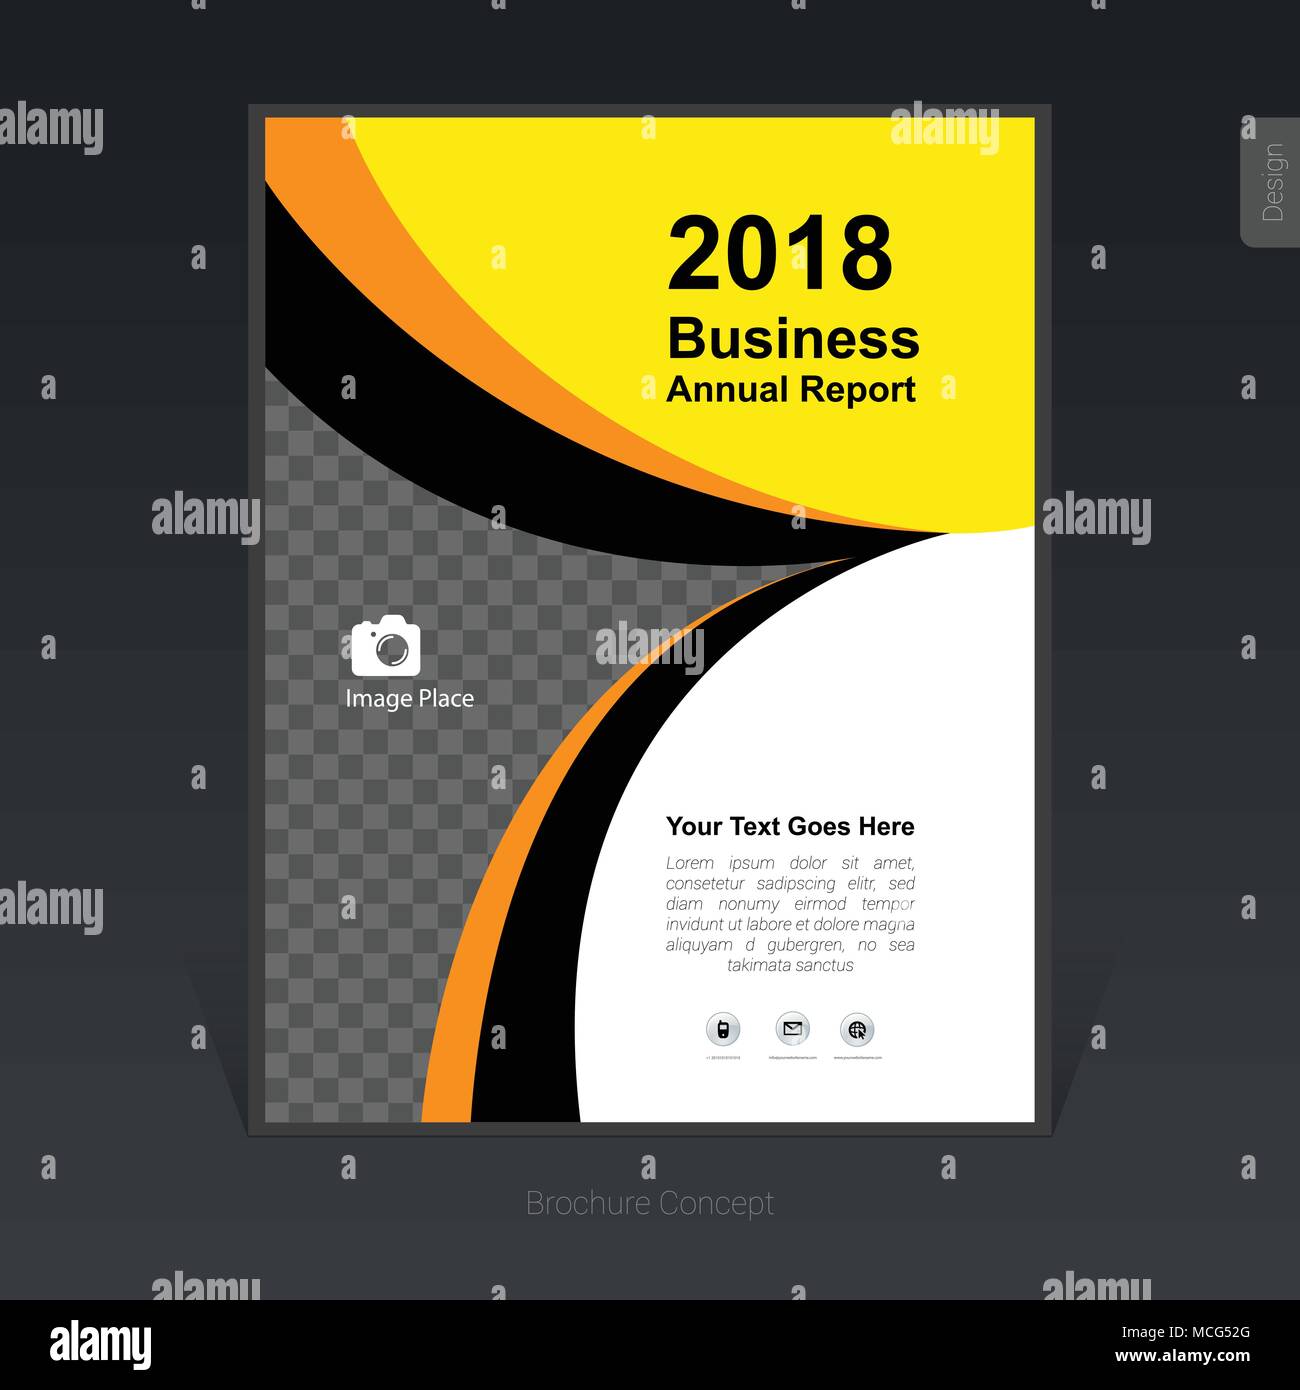 Geometrische Kurve Bunte Business Broschure Vorlage Cover Design Flyer Vector Illustration Stock Vektorgrafik Alamy